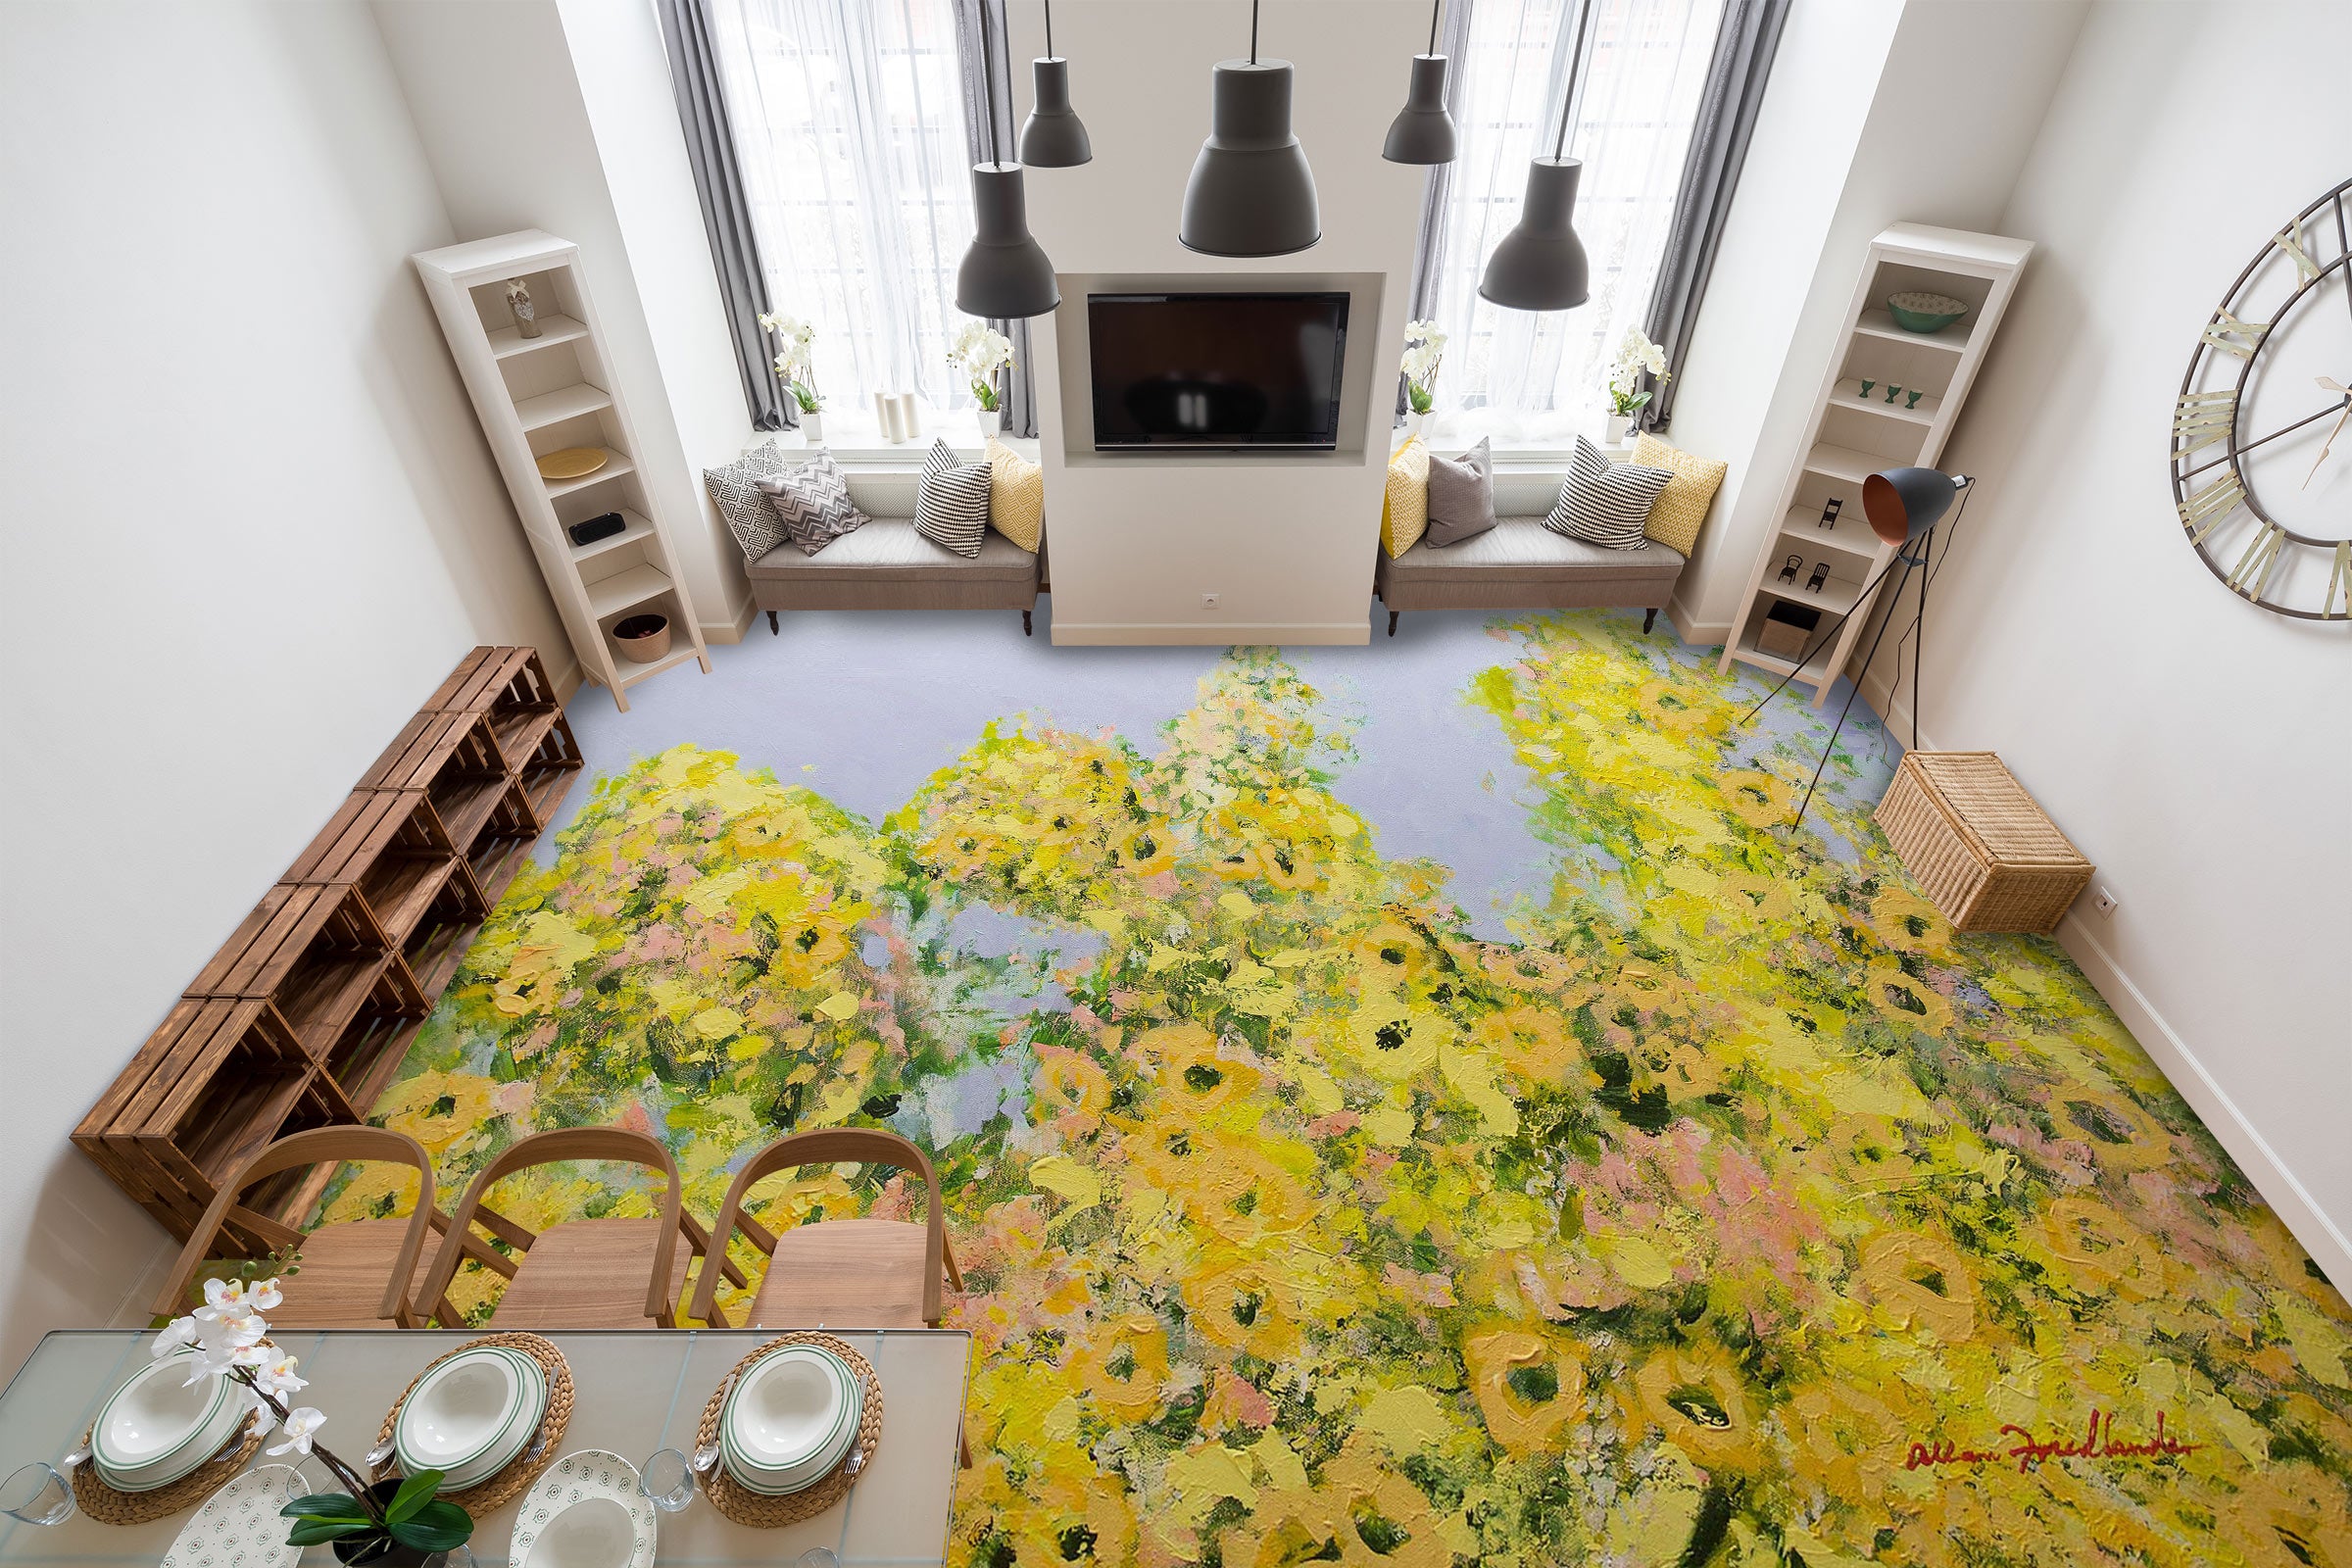 3D Yellow Floral Flowers Clump 9683 Allan P. Friedlander Floor Mural  Wallpaper Murals Self-Adhesive Removable Print Epoxy